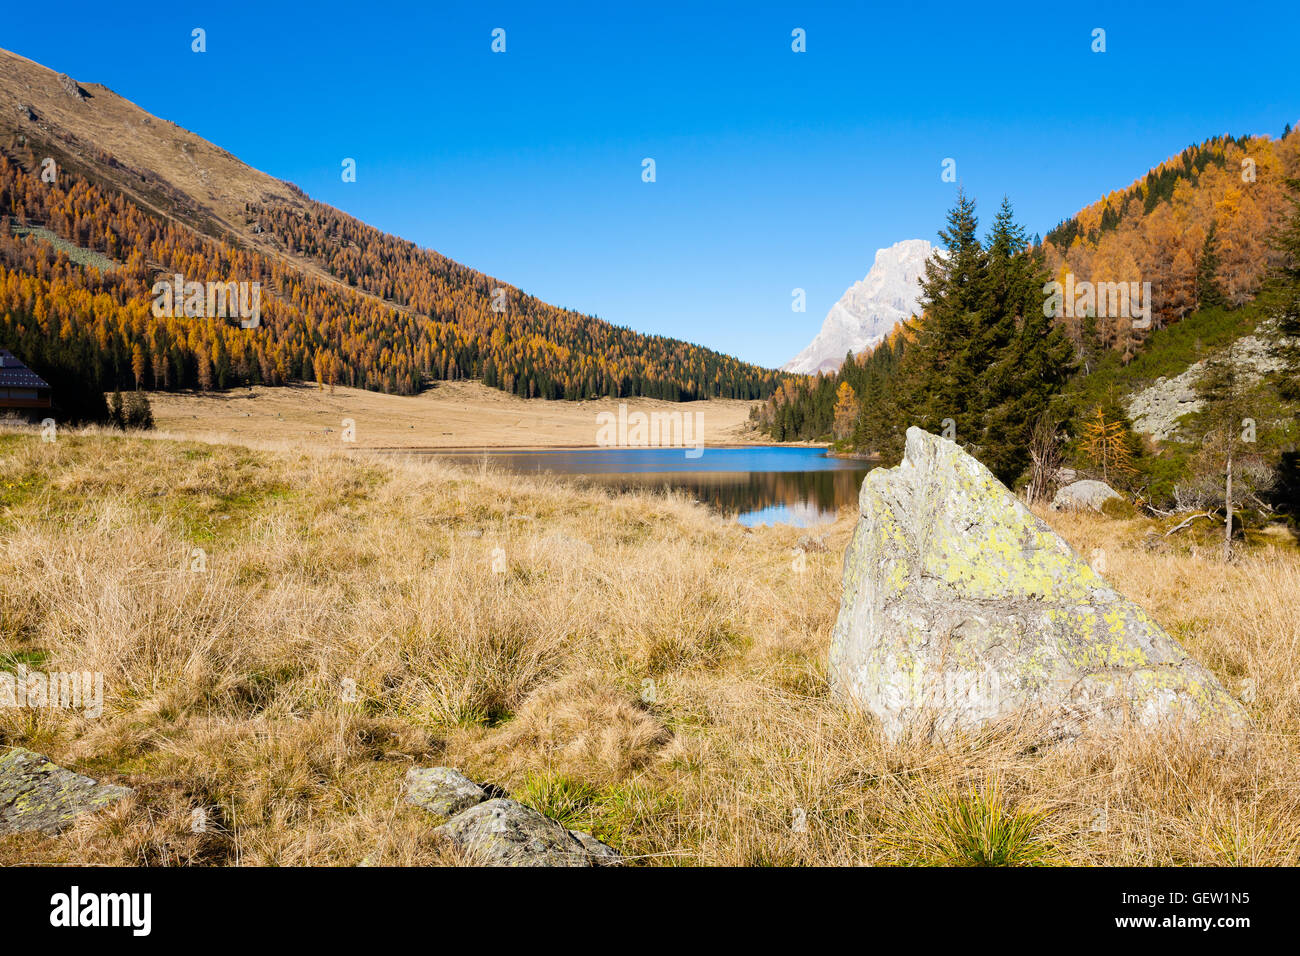 Panorama from 'Calaita Lake'. Italian alps landscape. Autumn view with yellow pines Stock Photo